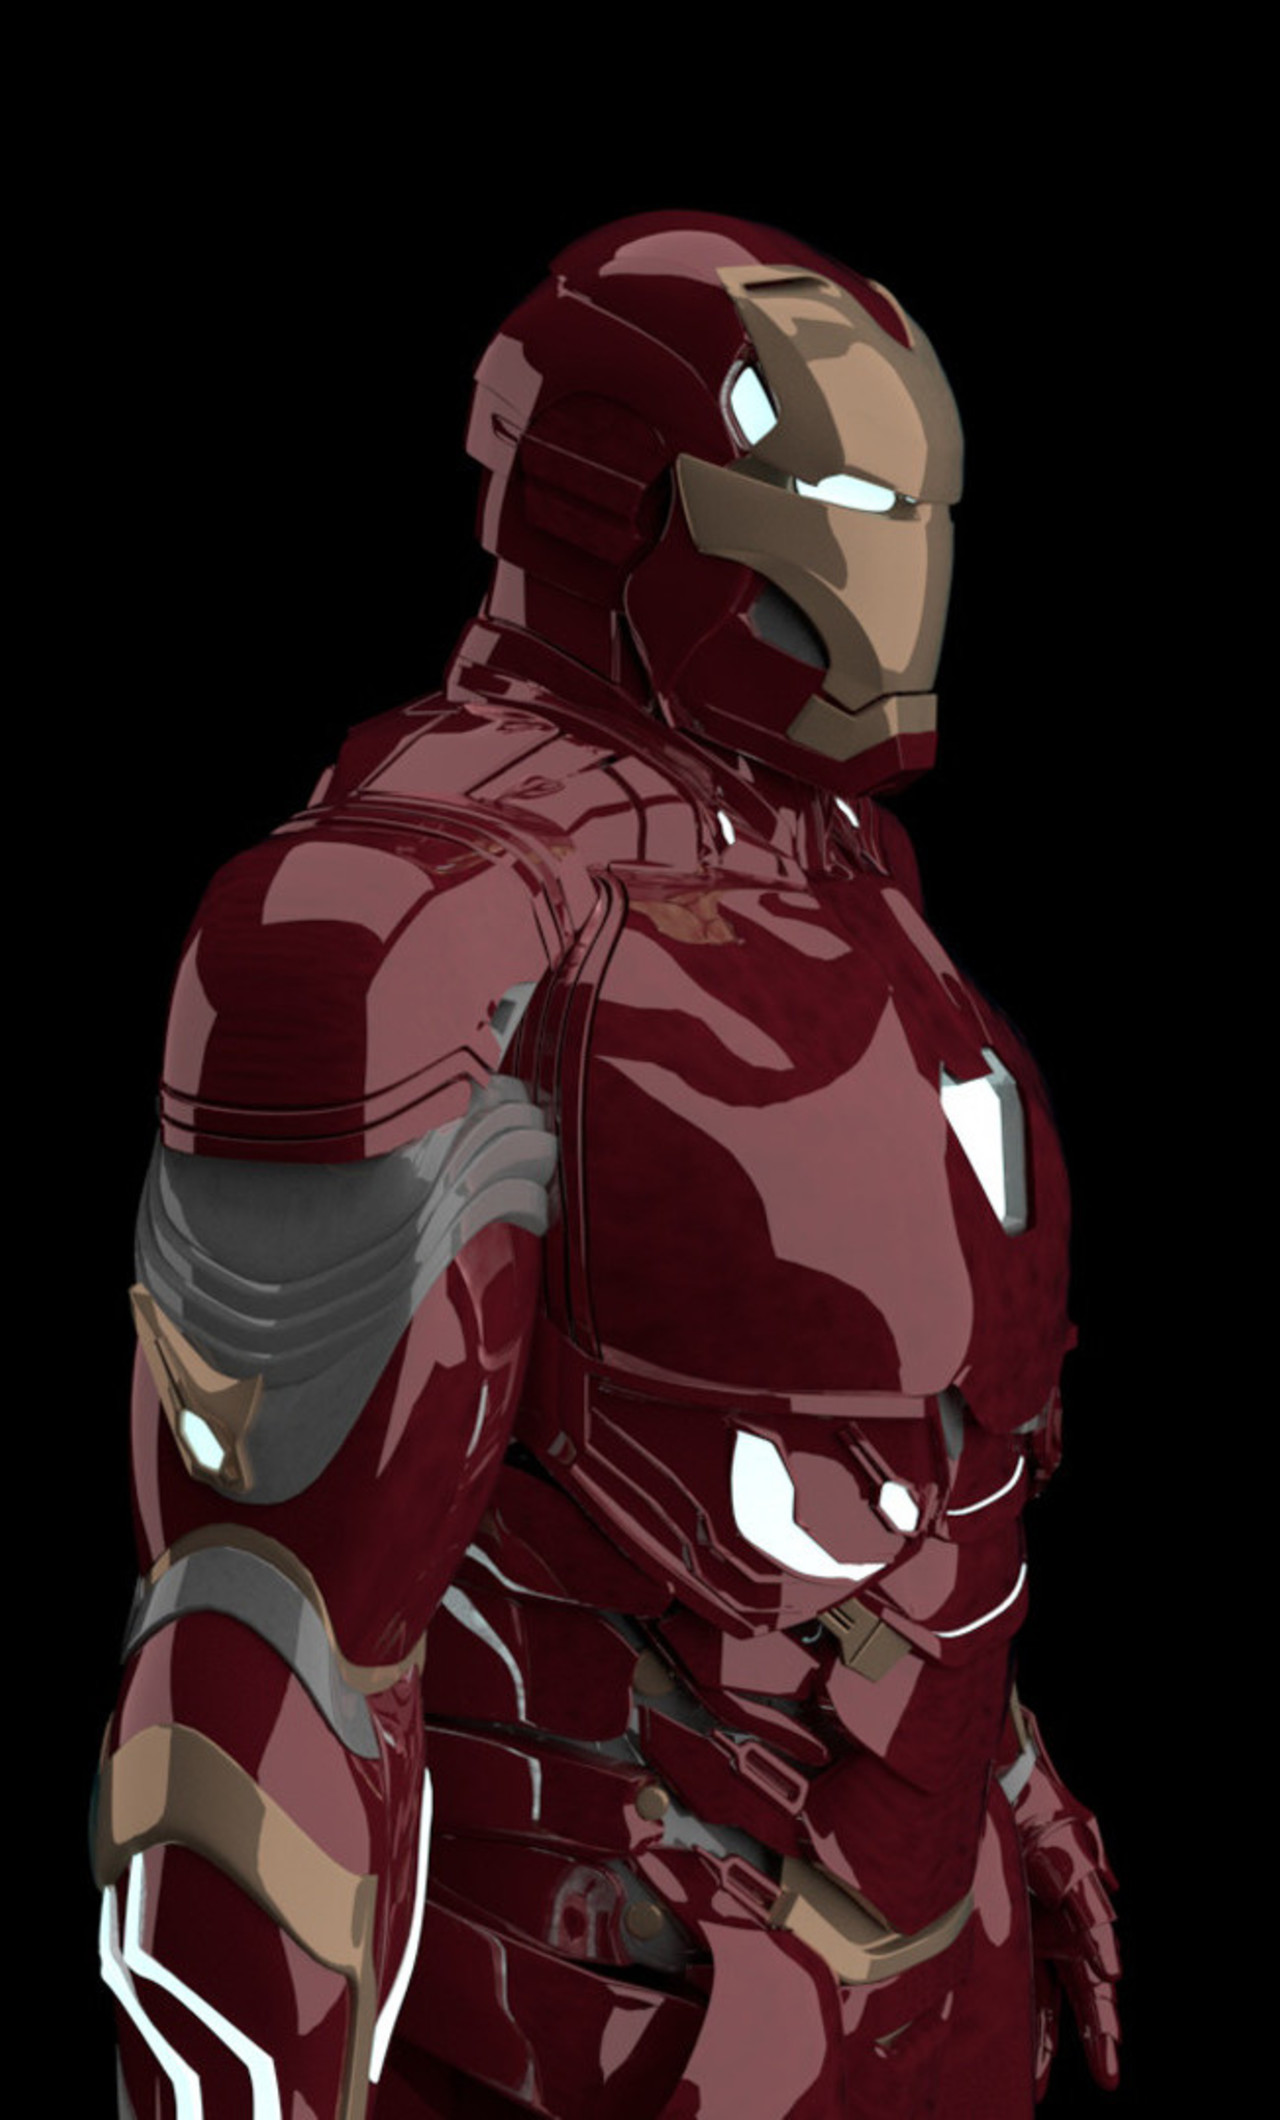 iron man wallpaper for iphone 6,iron man,superhero,fictional character,war machine,avengers